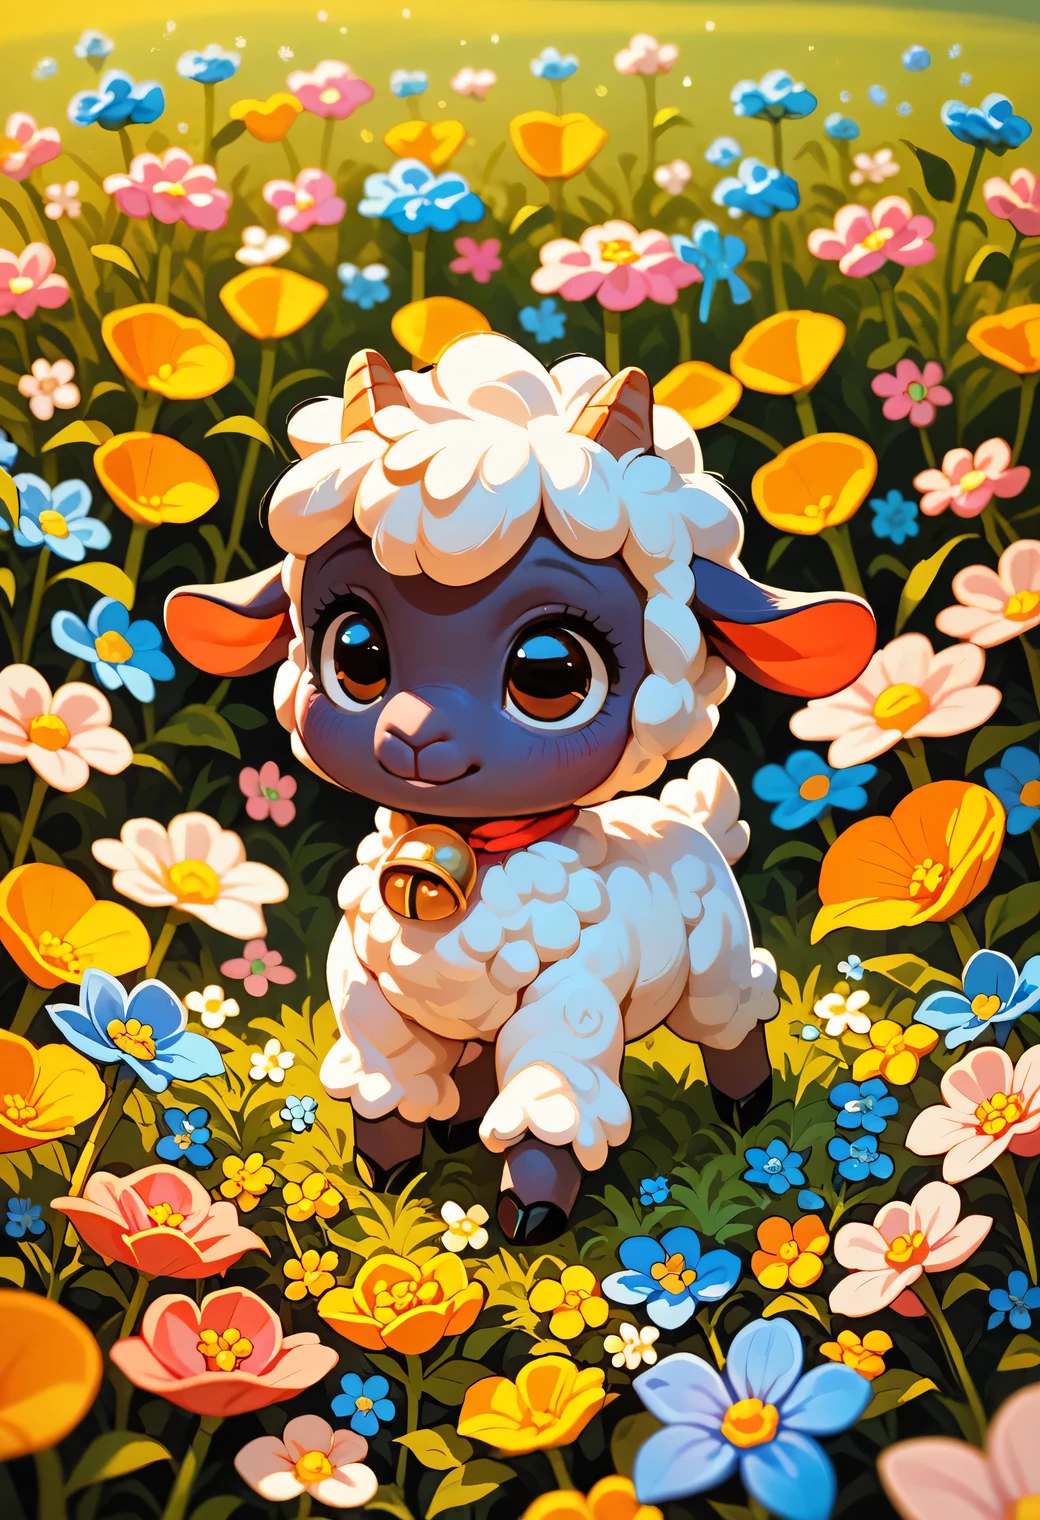 score_9, score_8_up, score_7_up,  adorable baby lamb, spring, flowers